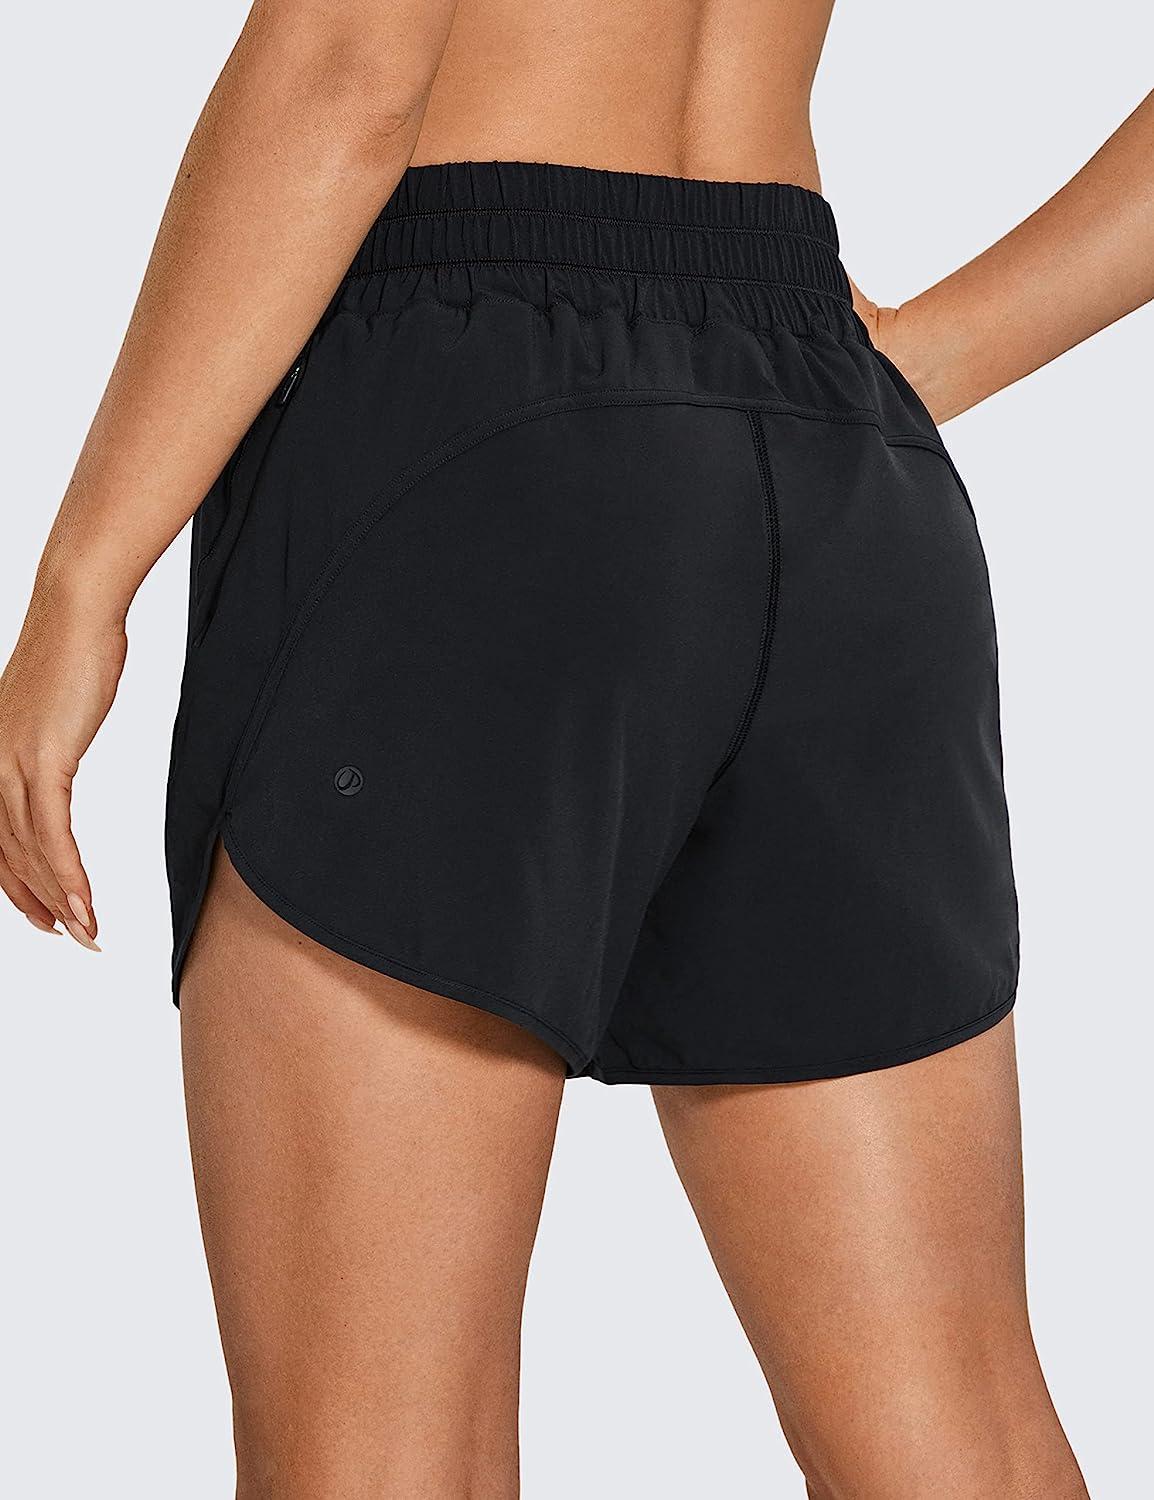 CRZ YOGA Women's Mid Rise Running Shorts Mesh Liner 3'' - Quick Dry  Drawstring Workout Athletic Gym Shorts Zip Pocket